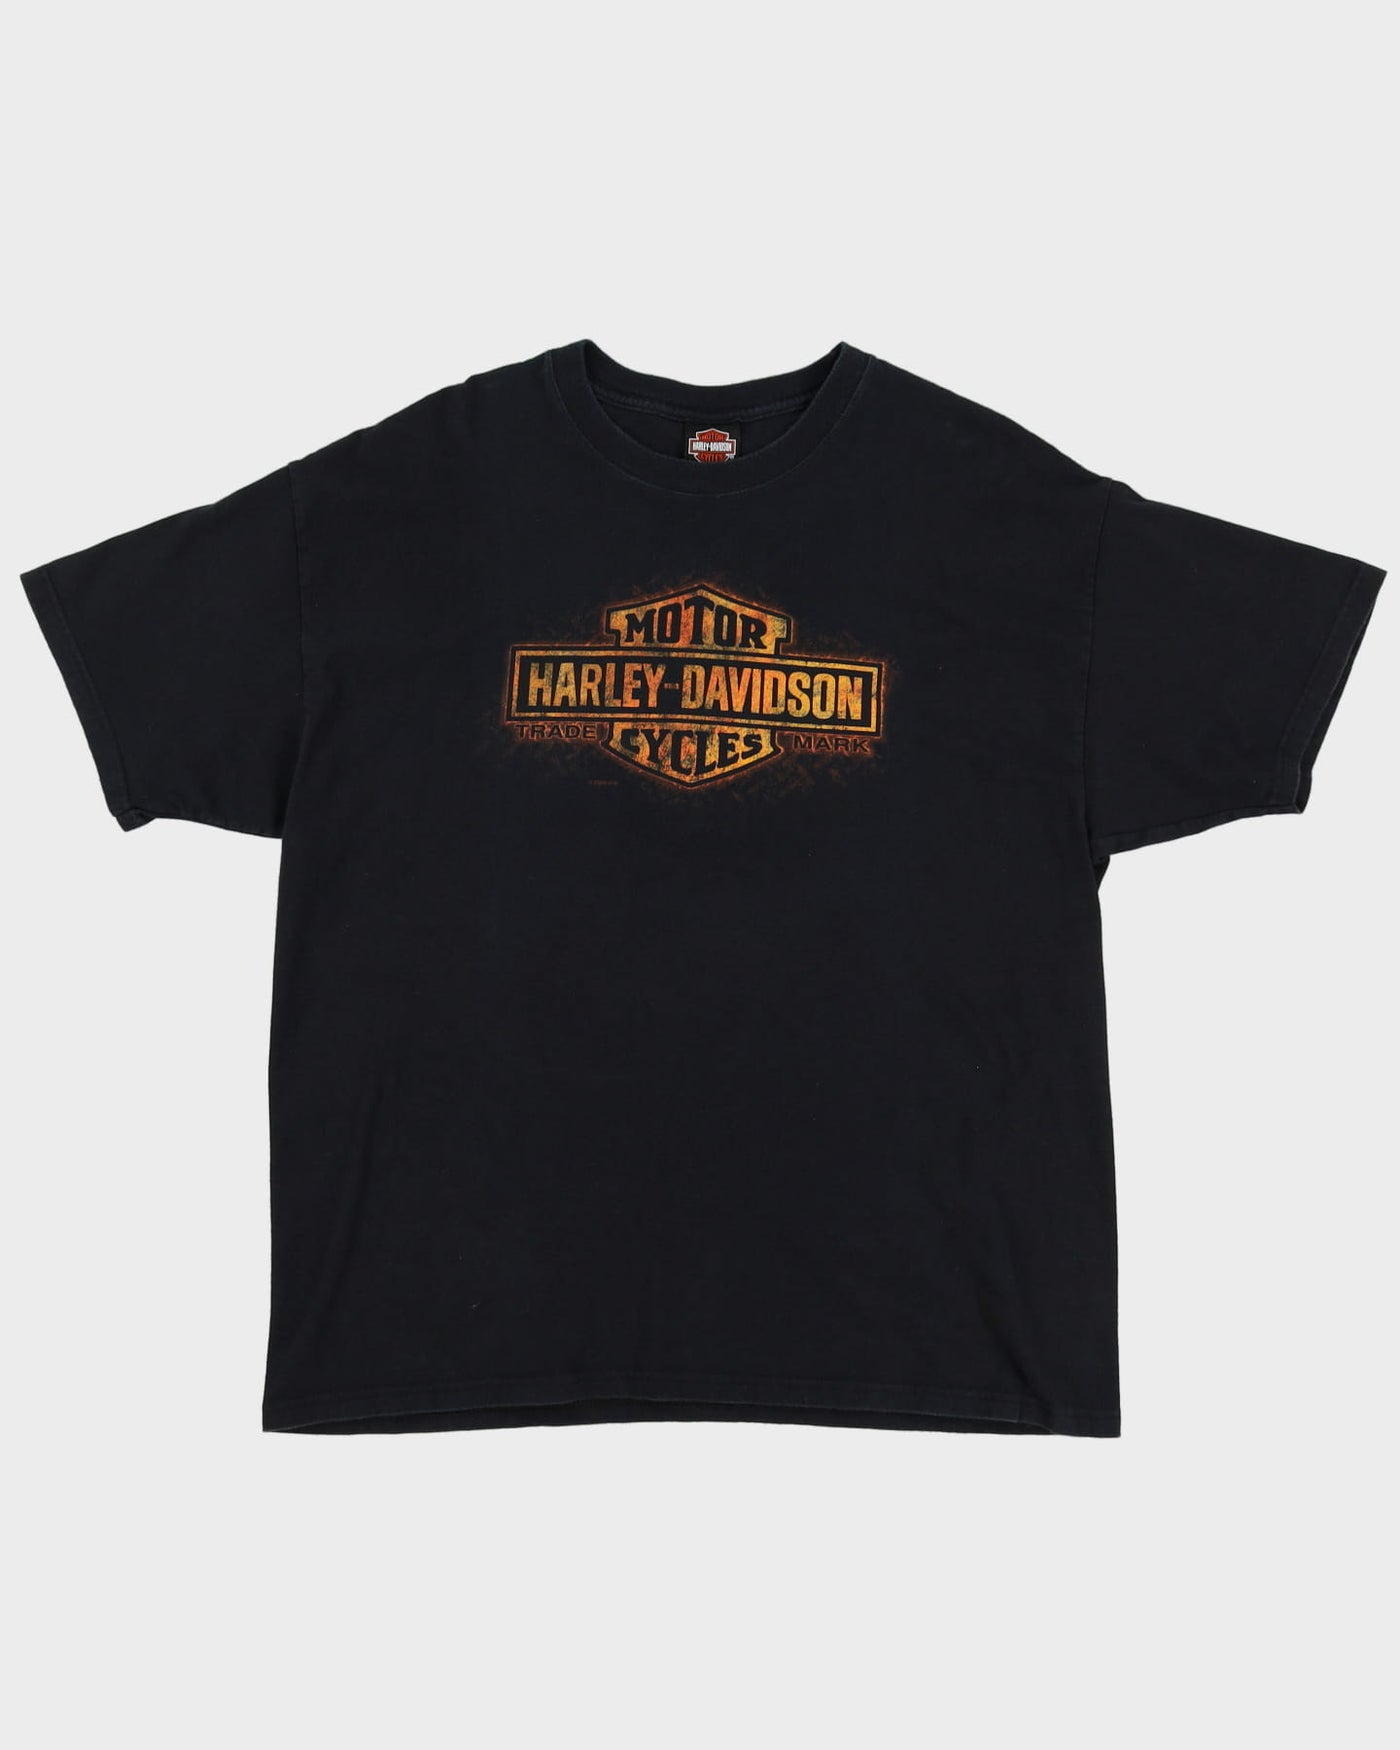 Harley Davidson Ray Price North Carolina Black Graphic T-Shirt - XL